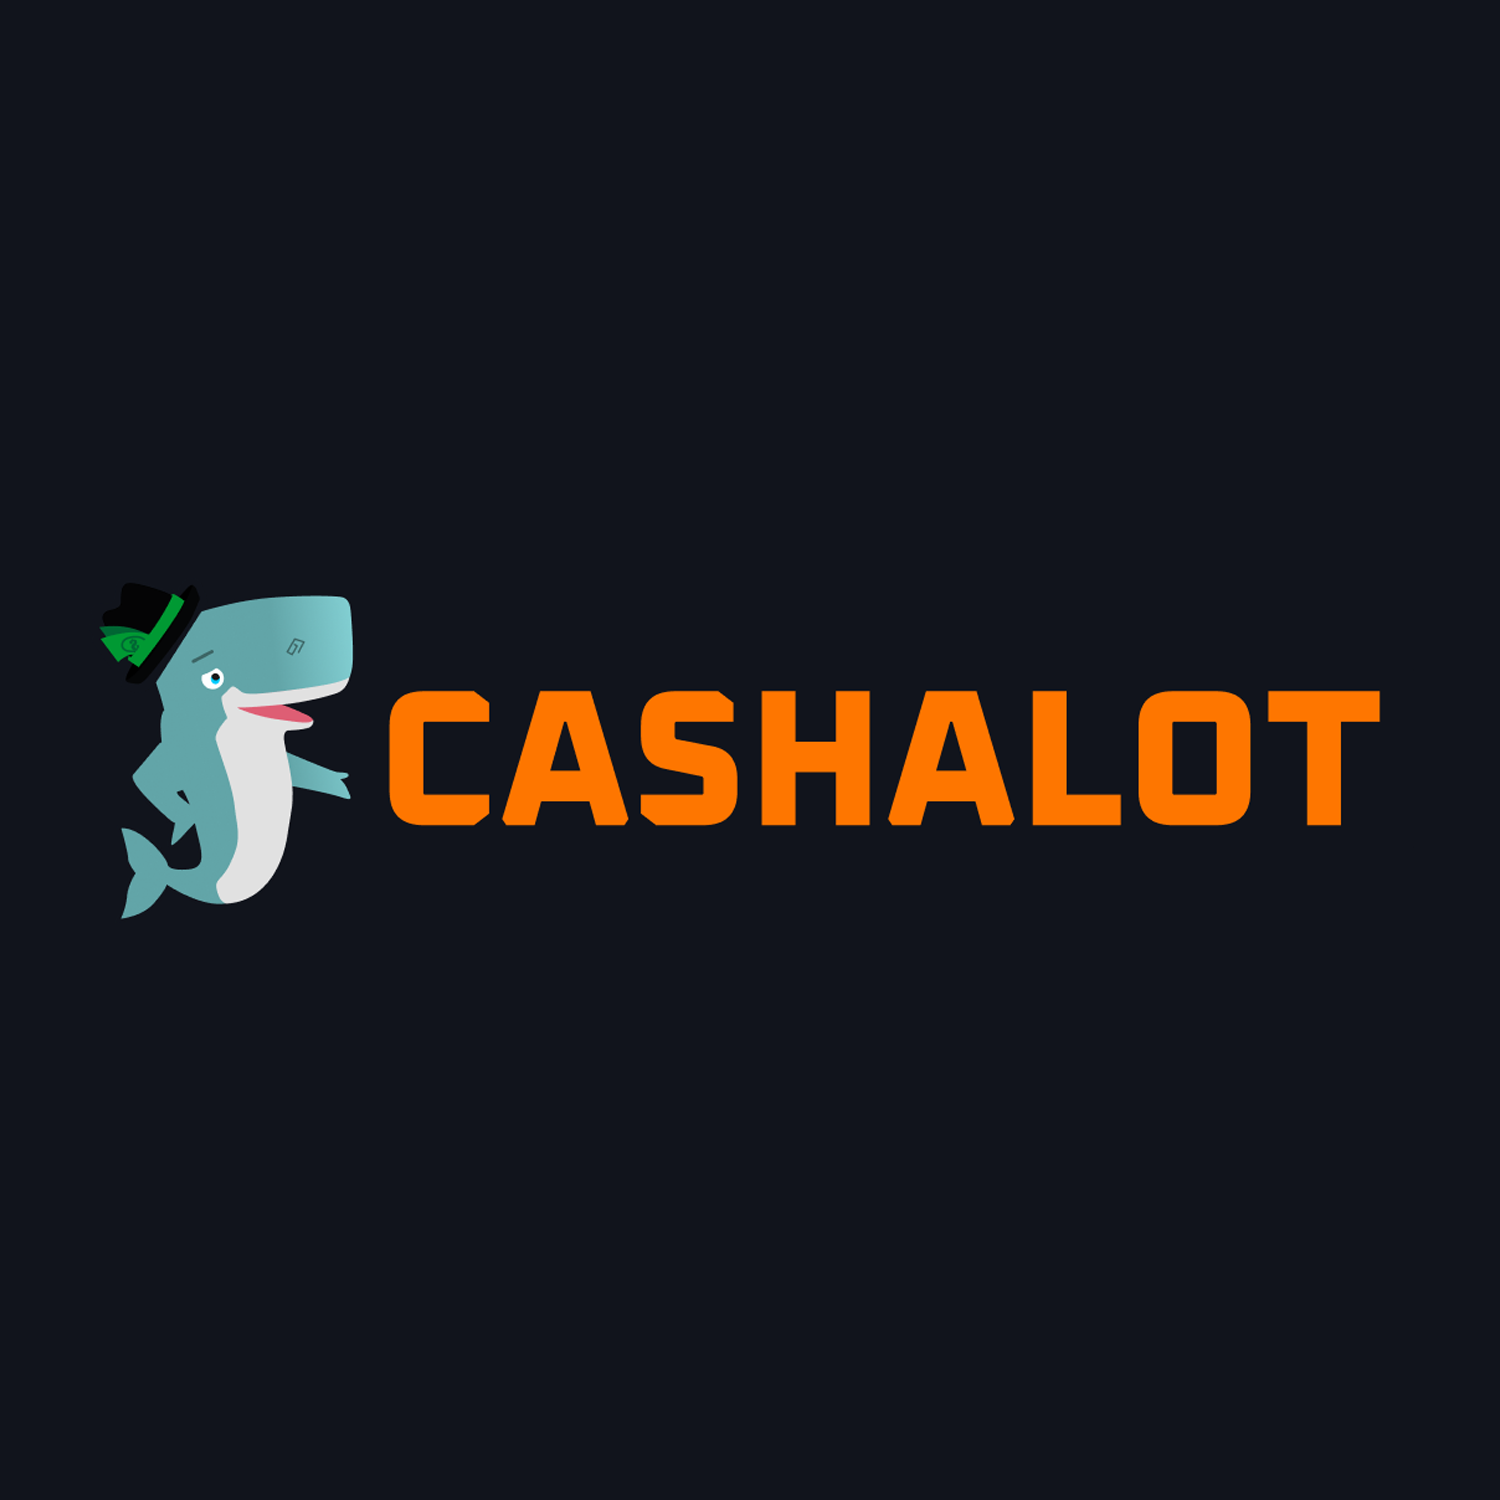 Cashalot No Deposit Bonus Code – NZ$10 Free on Registration